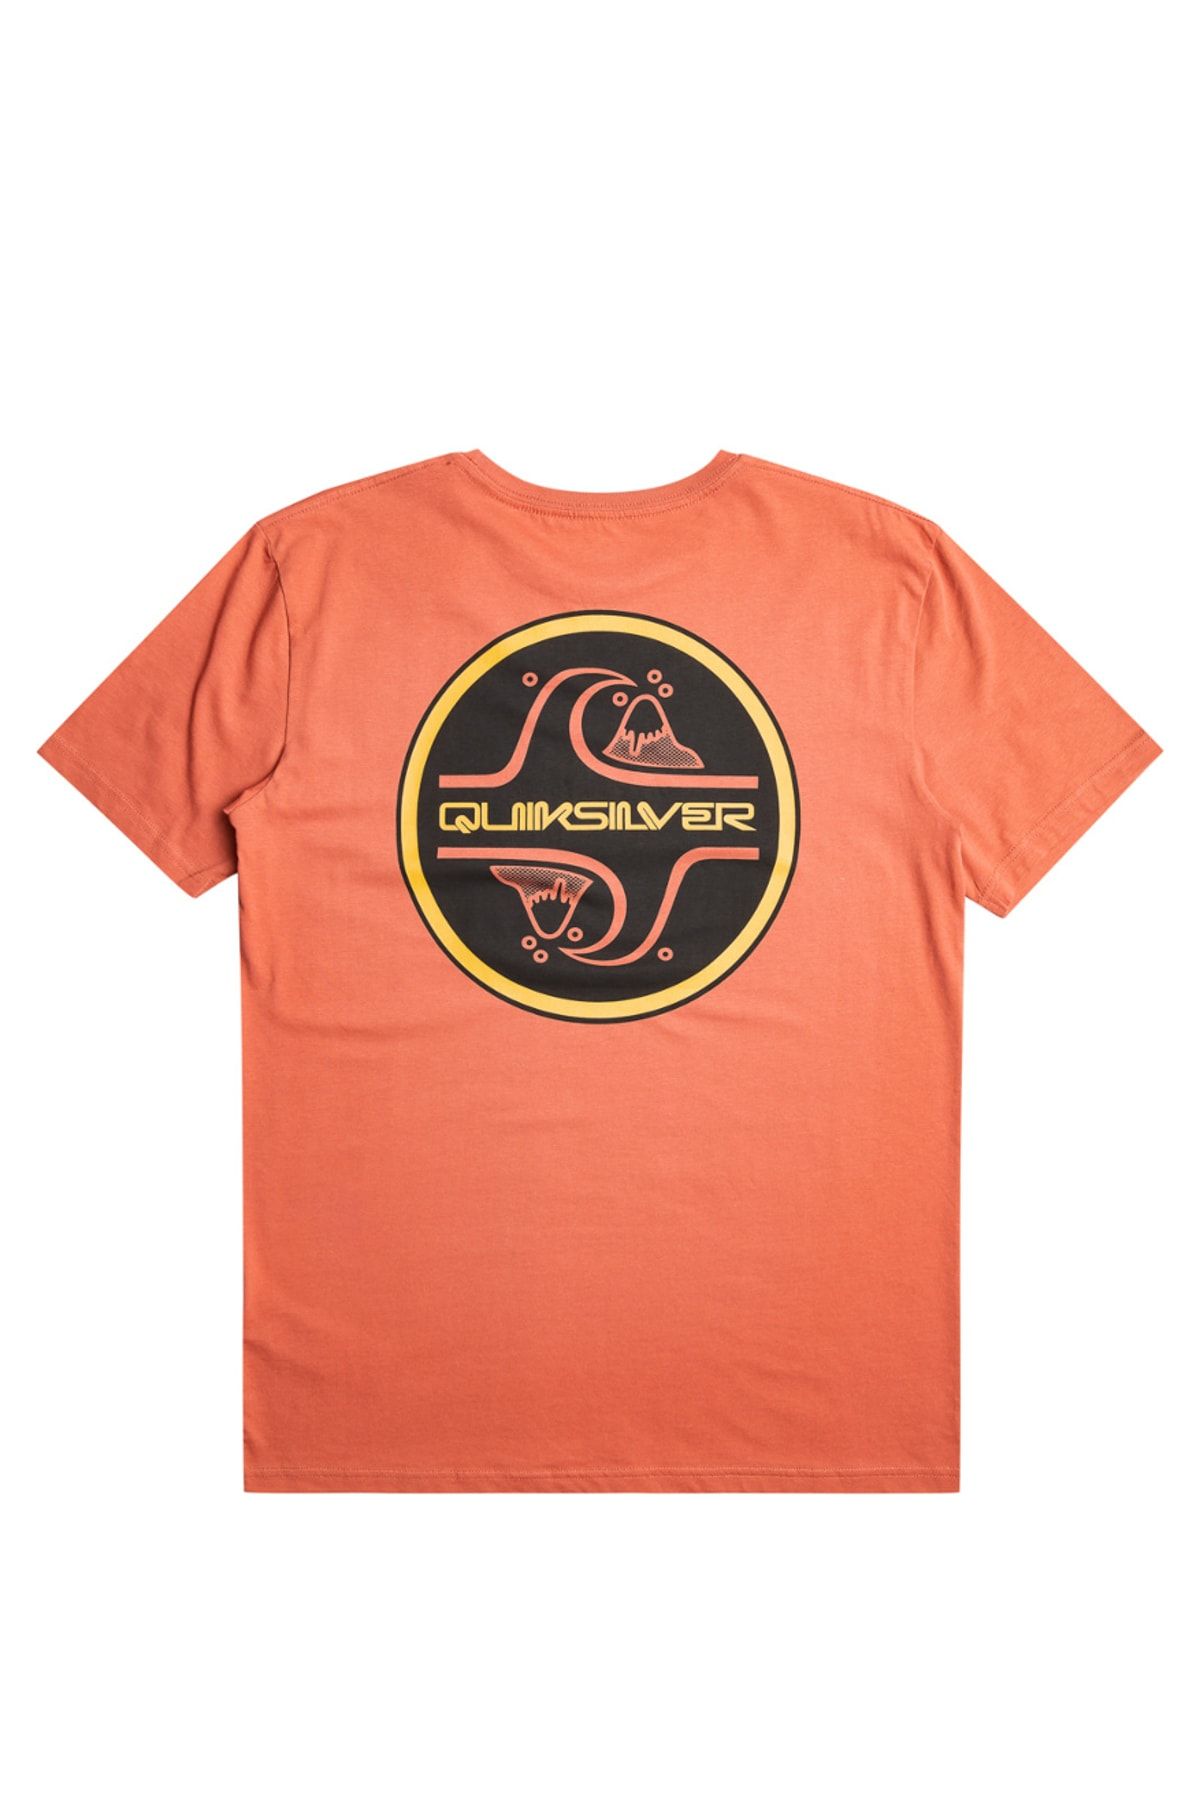 T-Shirt - Trendyol Quiksilver Orange - Fit - Regular